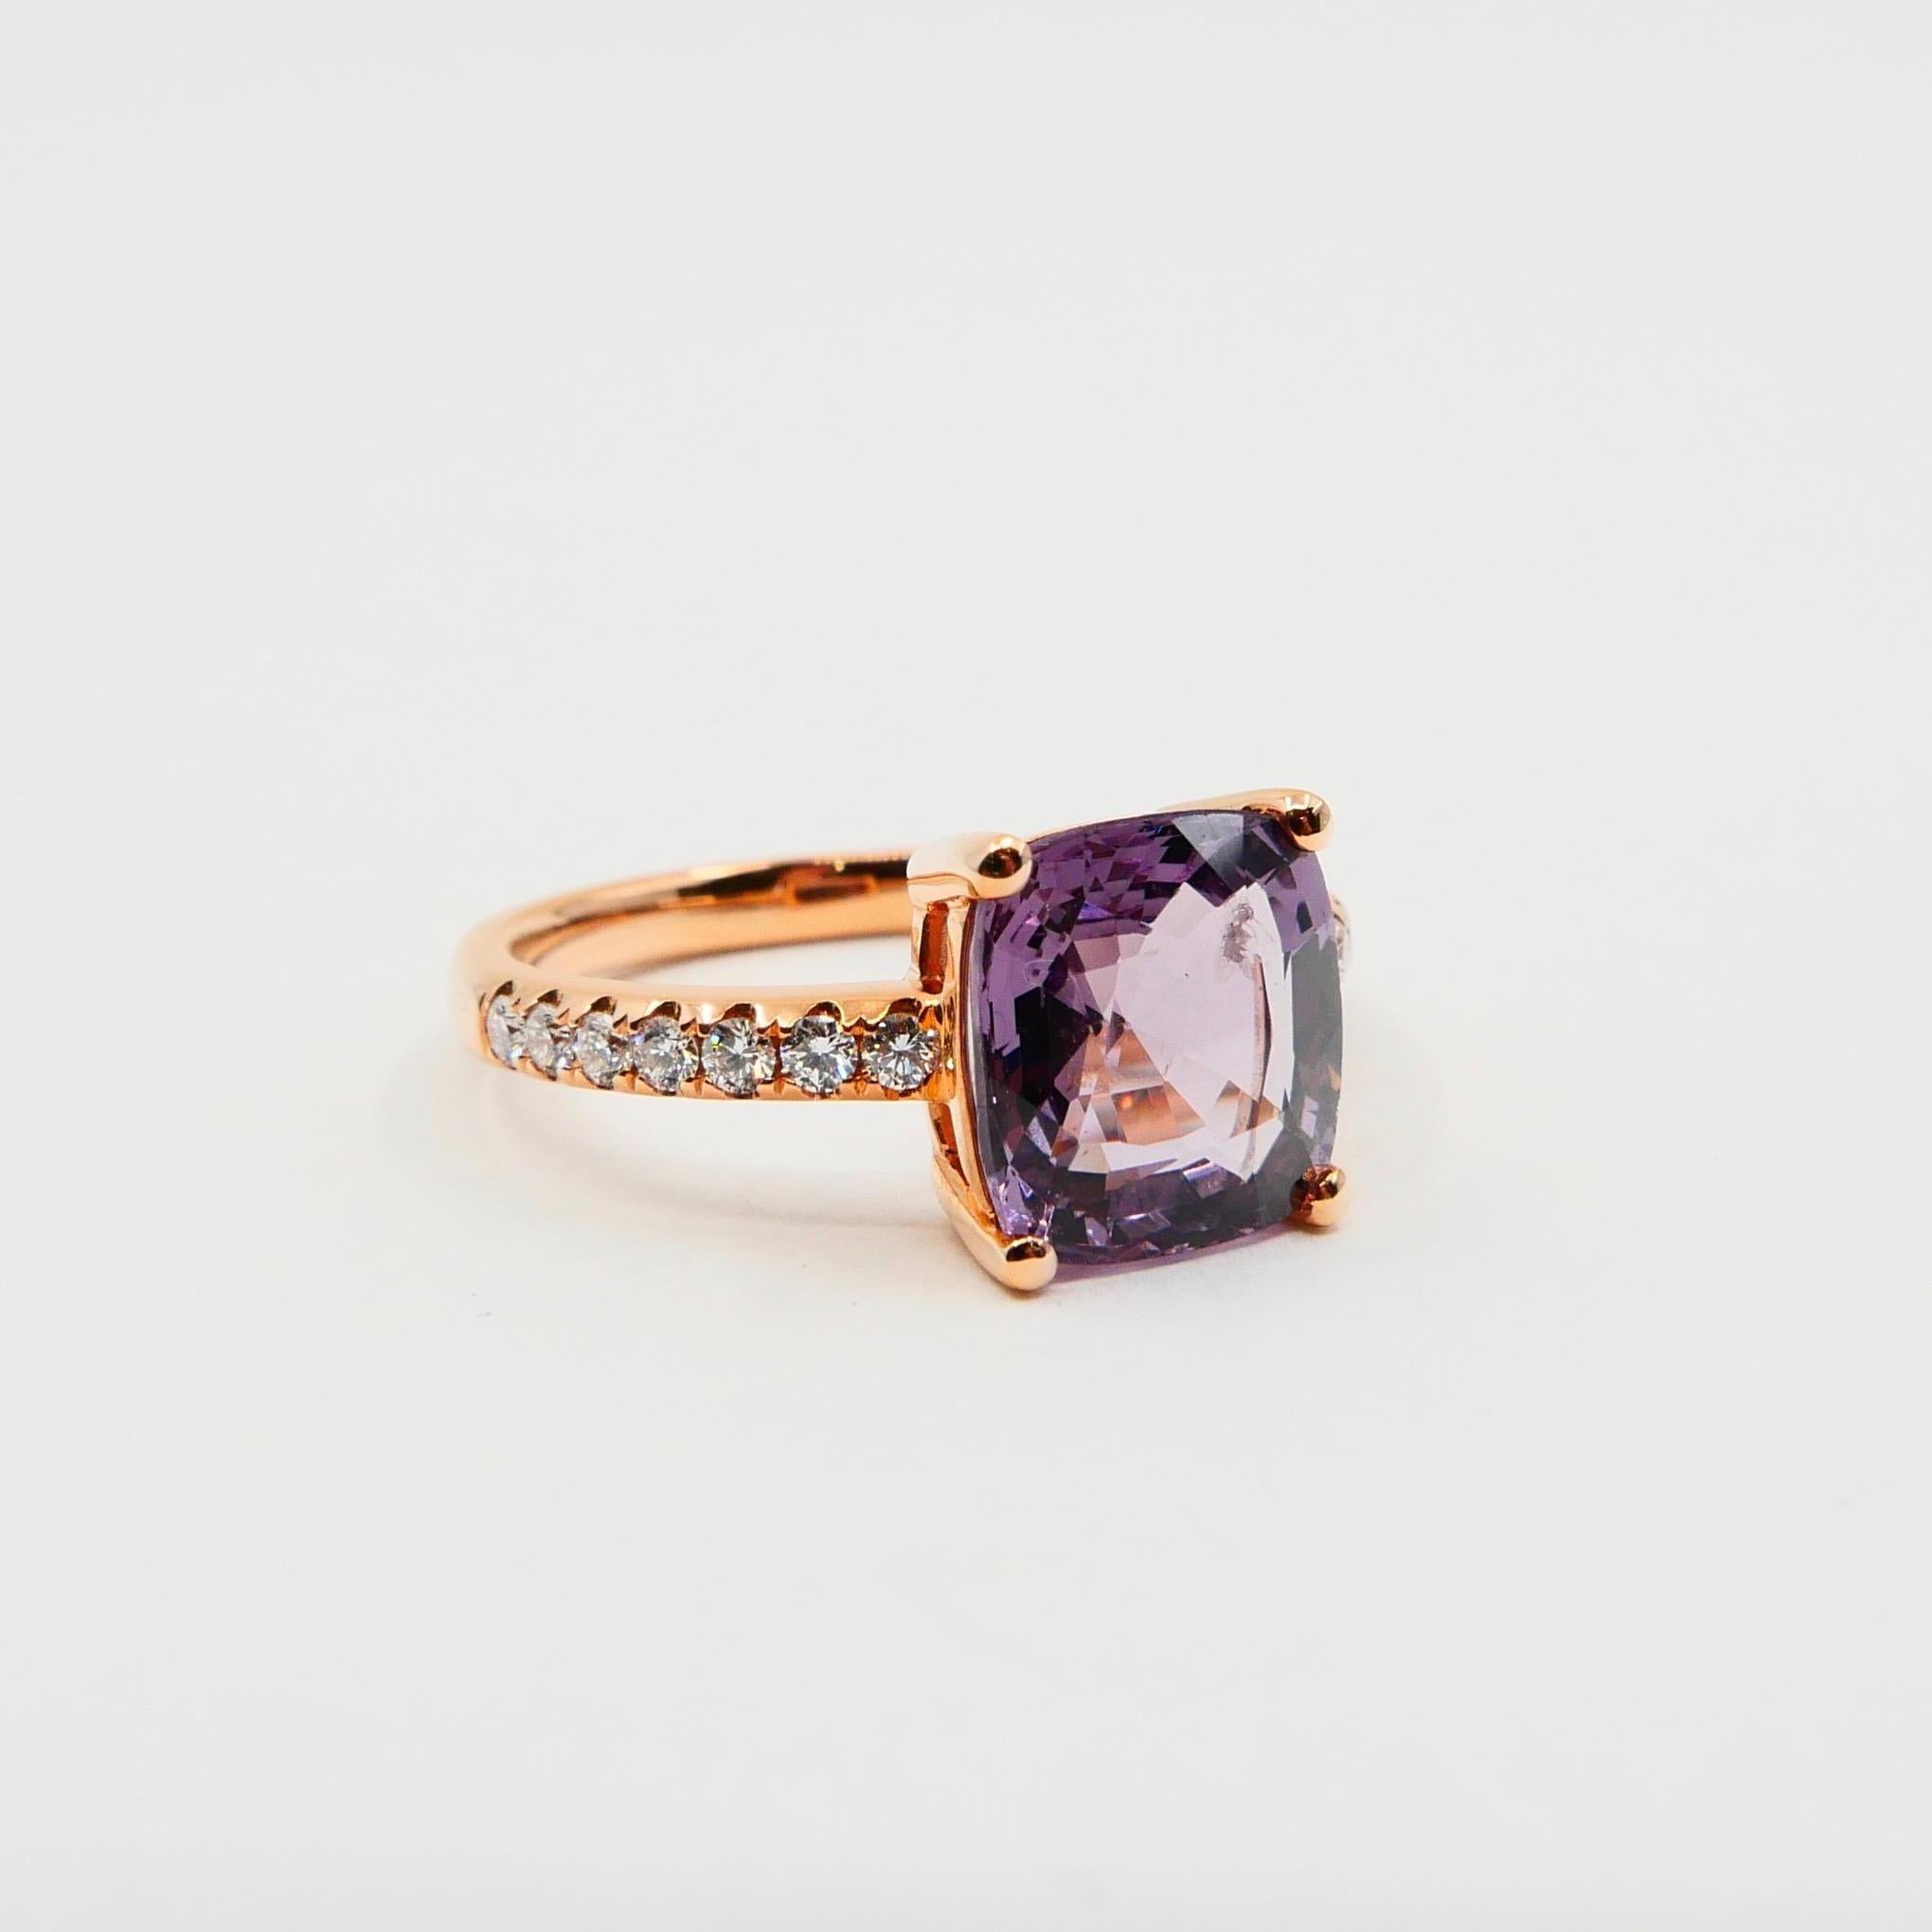 Natural 3.22 Carat Purple Spinel and Diamond Ring Set in 18 Karat Rose Gold For Sale 3